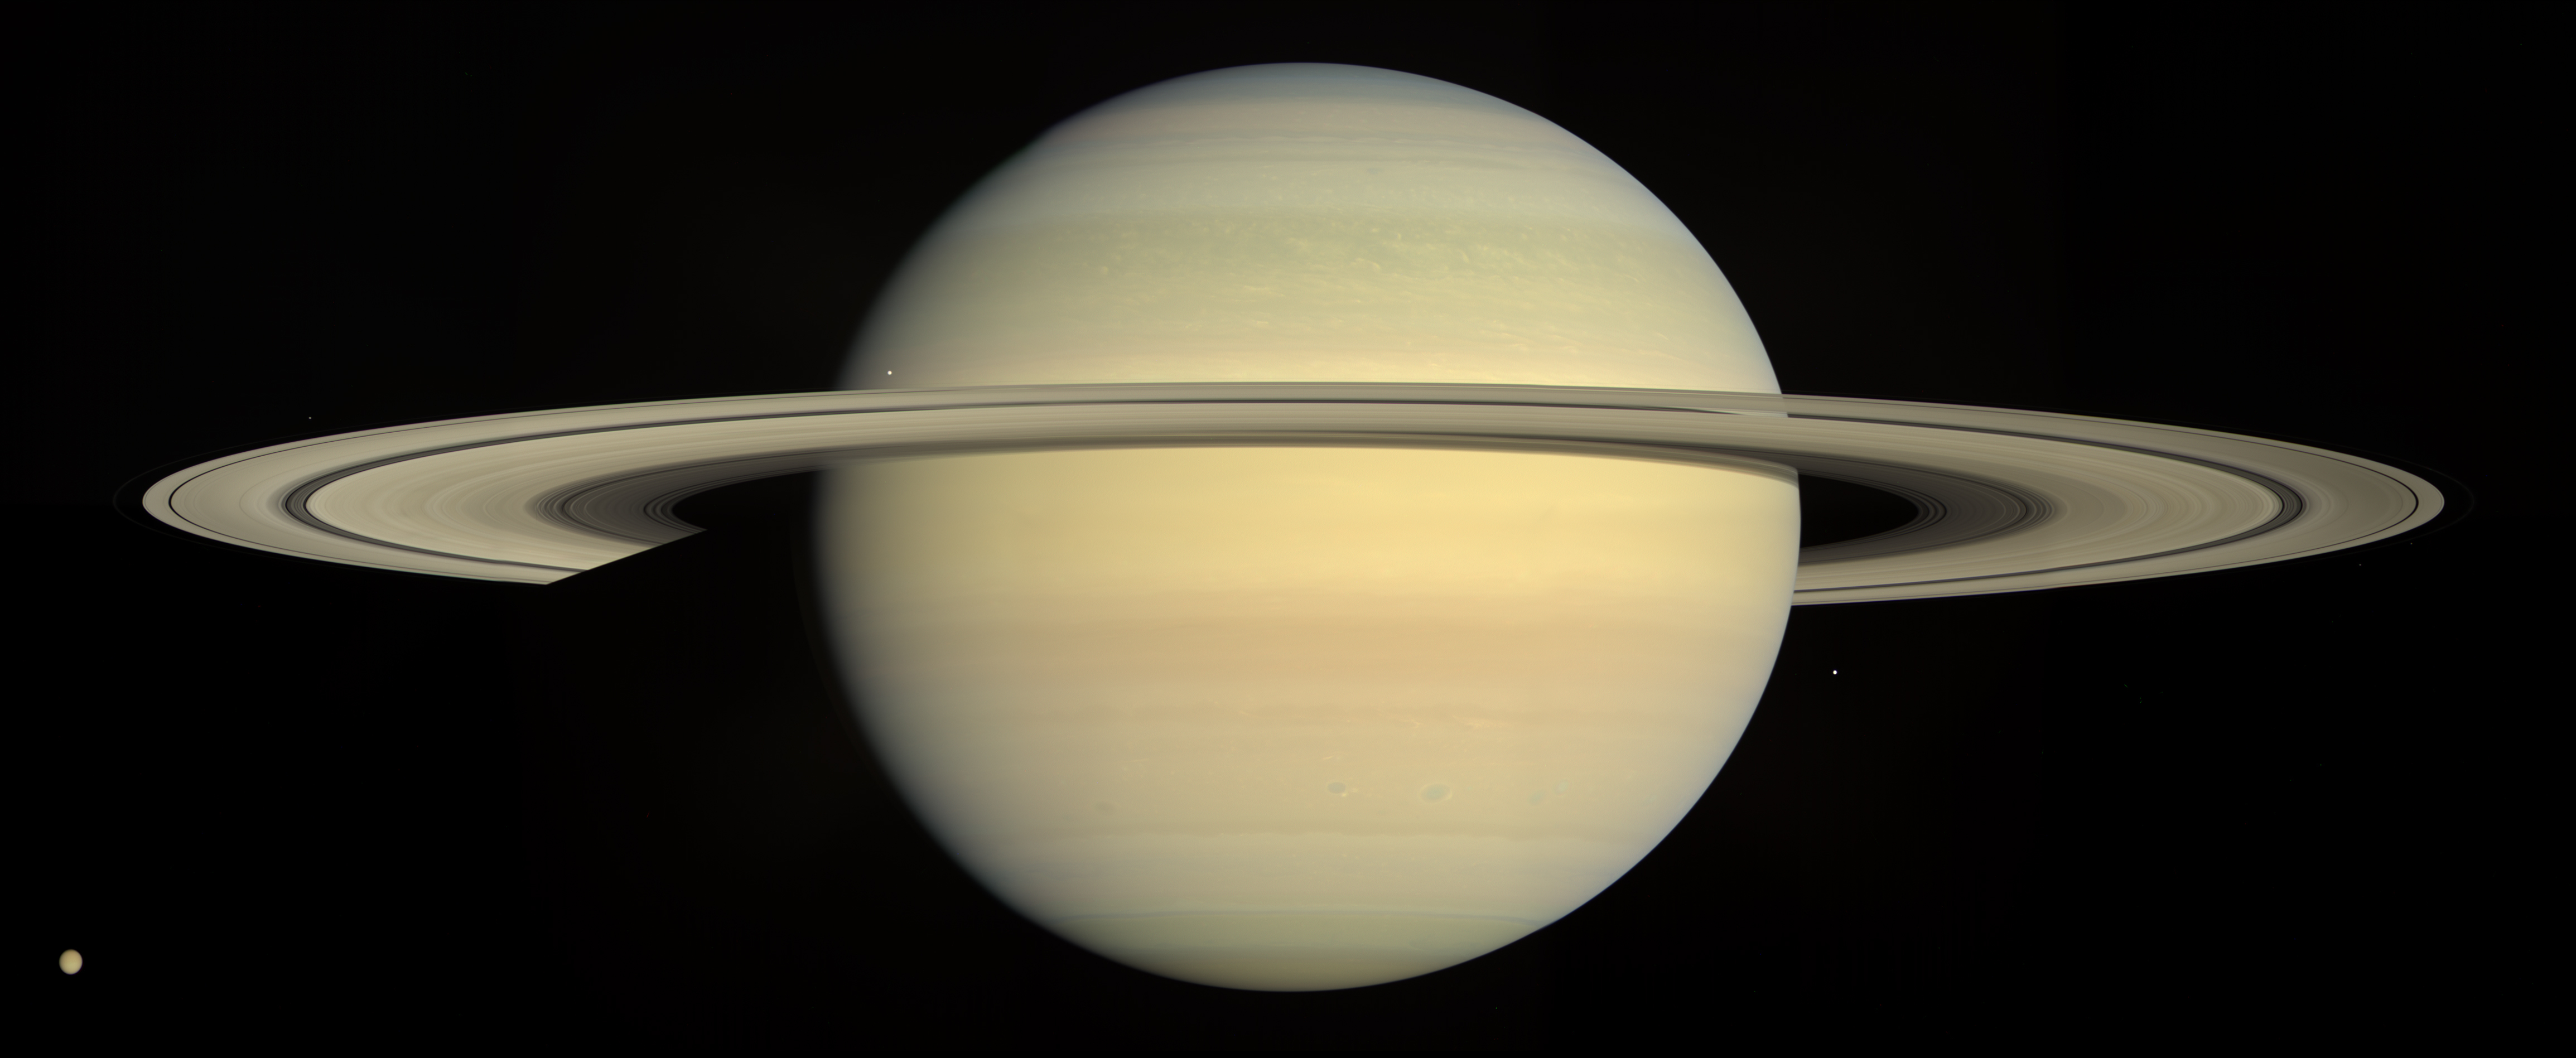 Saturn | The Planetary Society